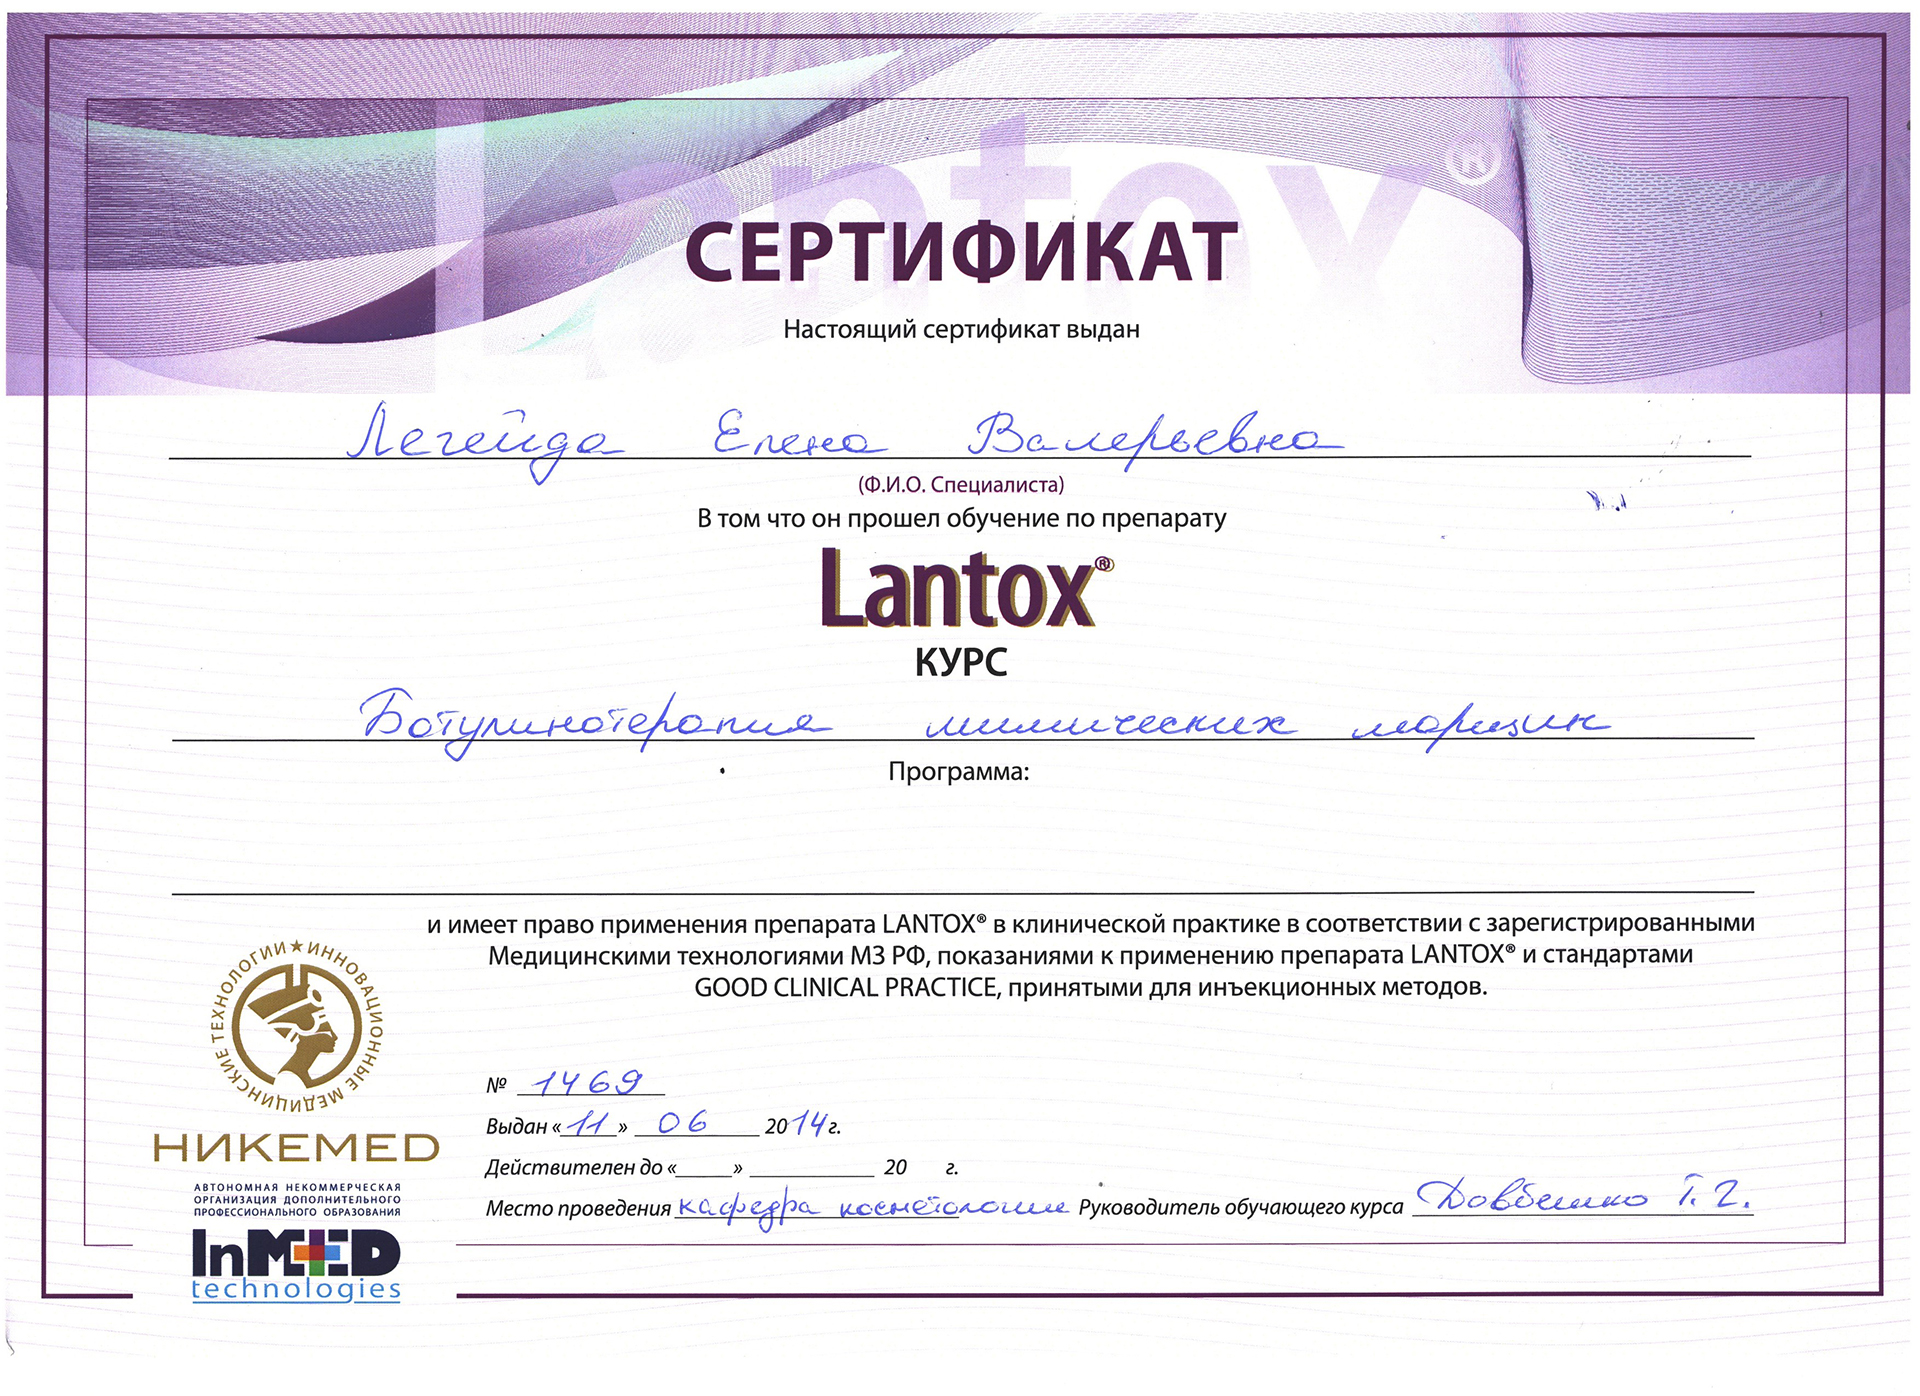 Сертификат — Обучение по препарату Lantox. Легейда Елена Валерьевна